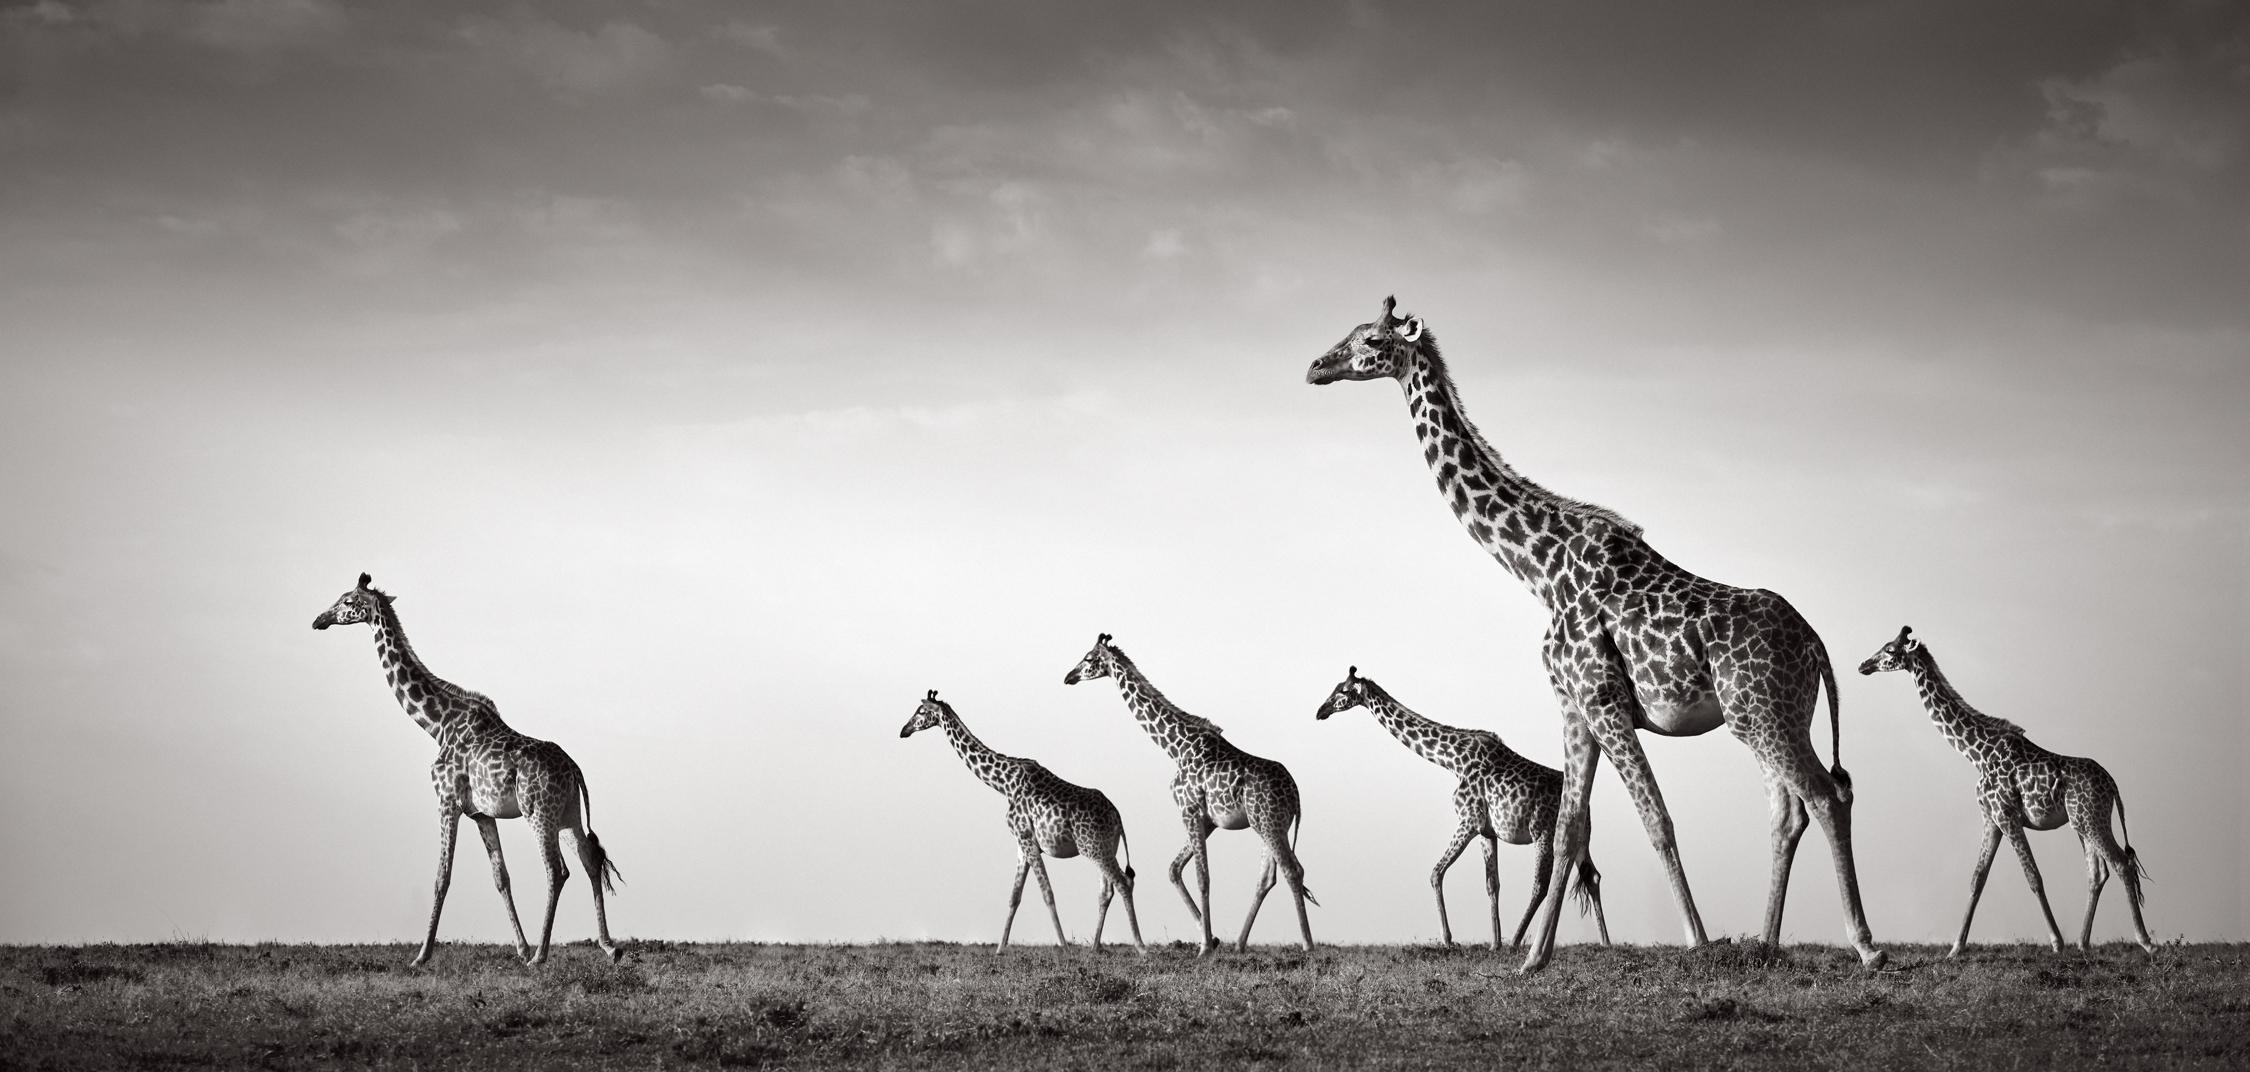 Drew Doggett Black and White Photograph - Otherworldly Black & White Image of a Herd of Giraffes Walking Across the Plains